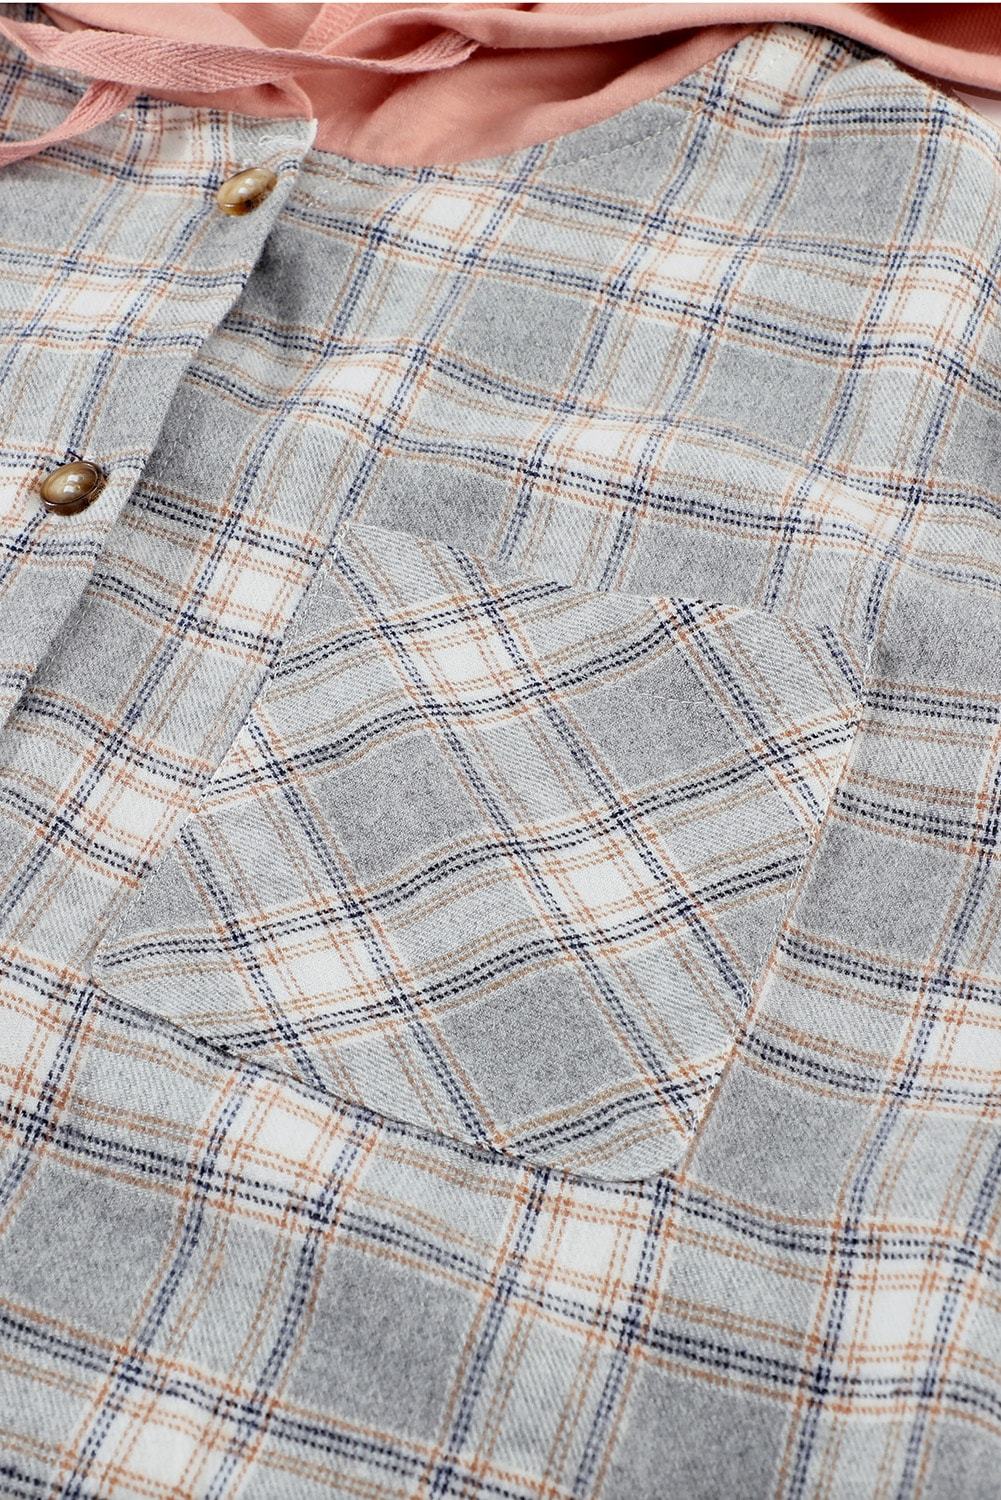 US$8.5 Khaki Drawstring Plaid Hooded Shirt Coat Wholesale - www.dear ...